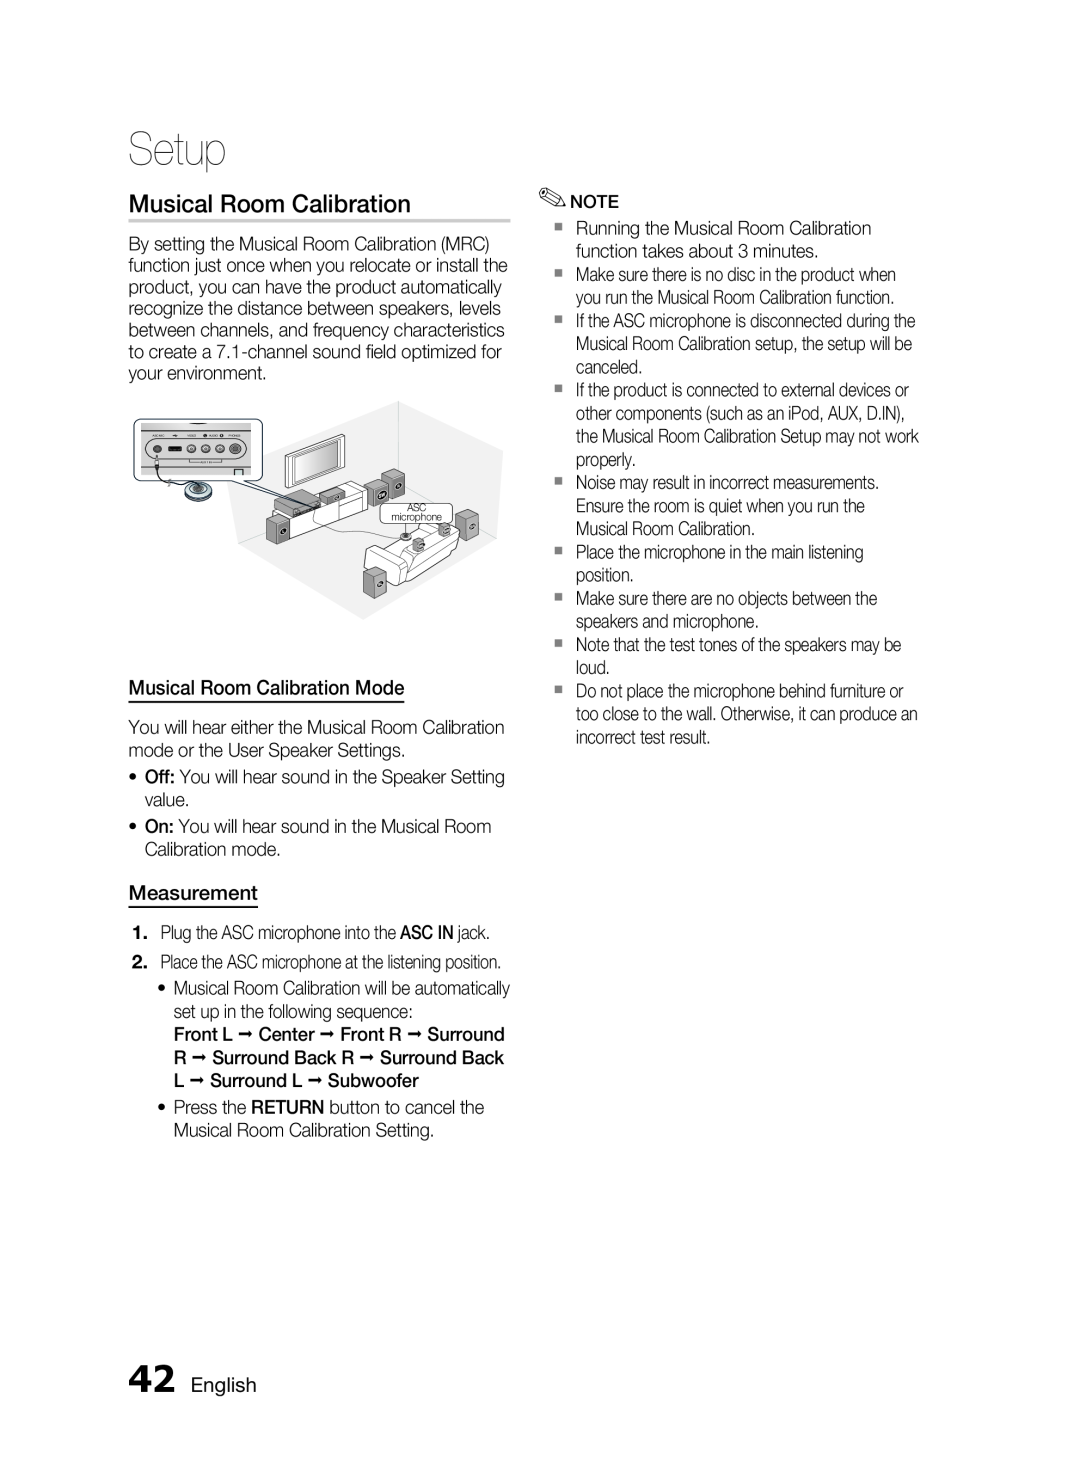 Samsung HW-D7000 user manual Setup, Musical Room Calibration Mode, Measurement, English 